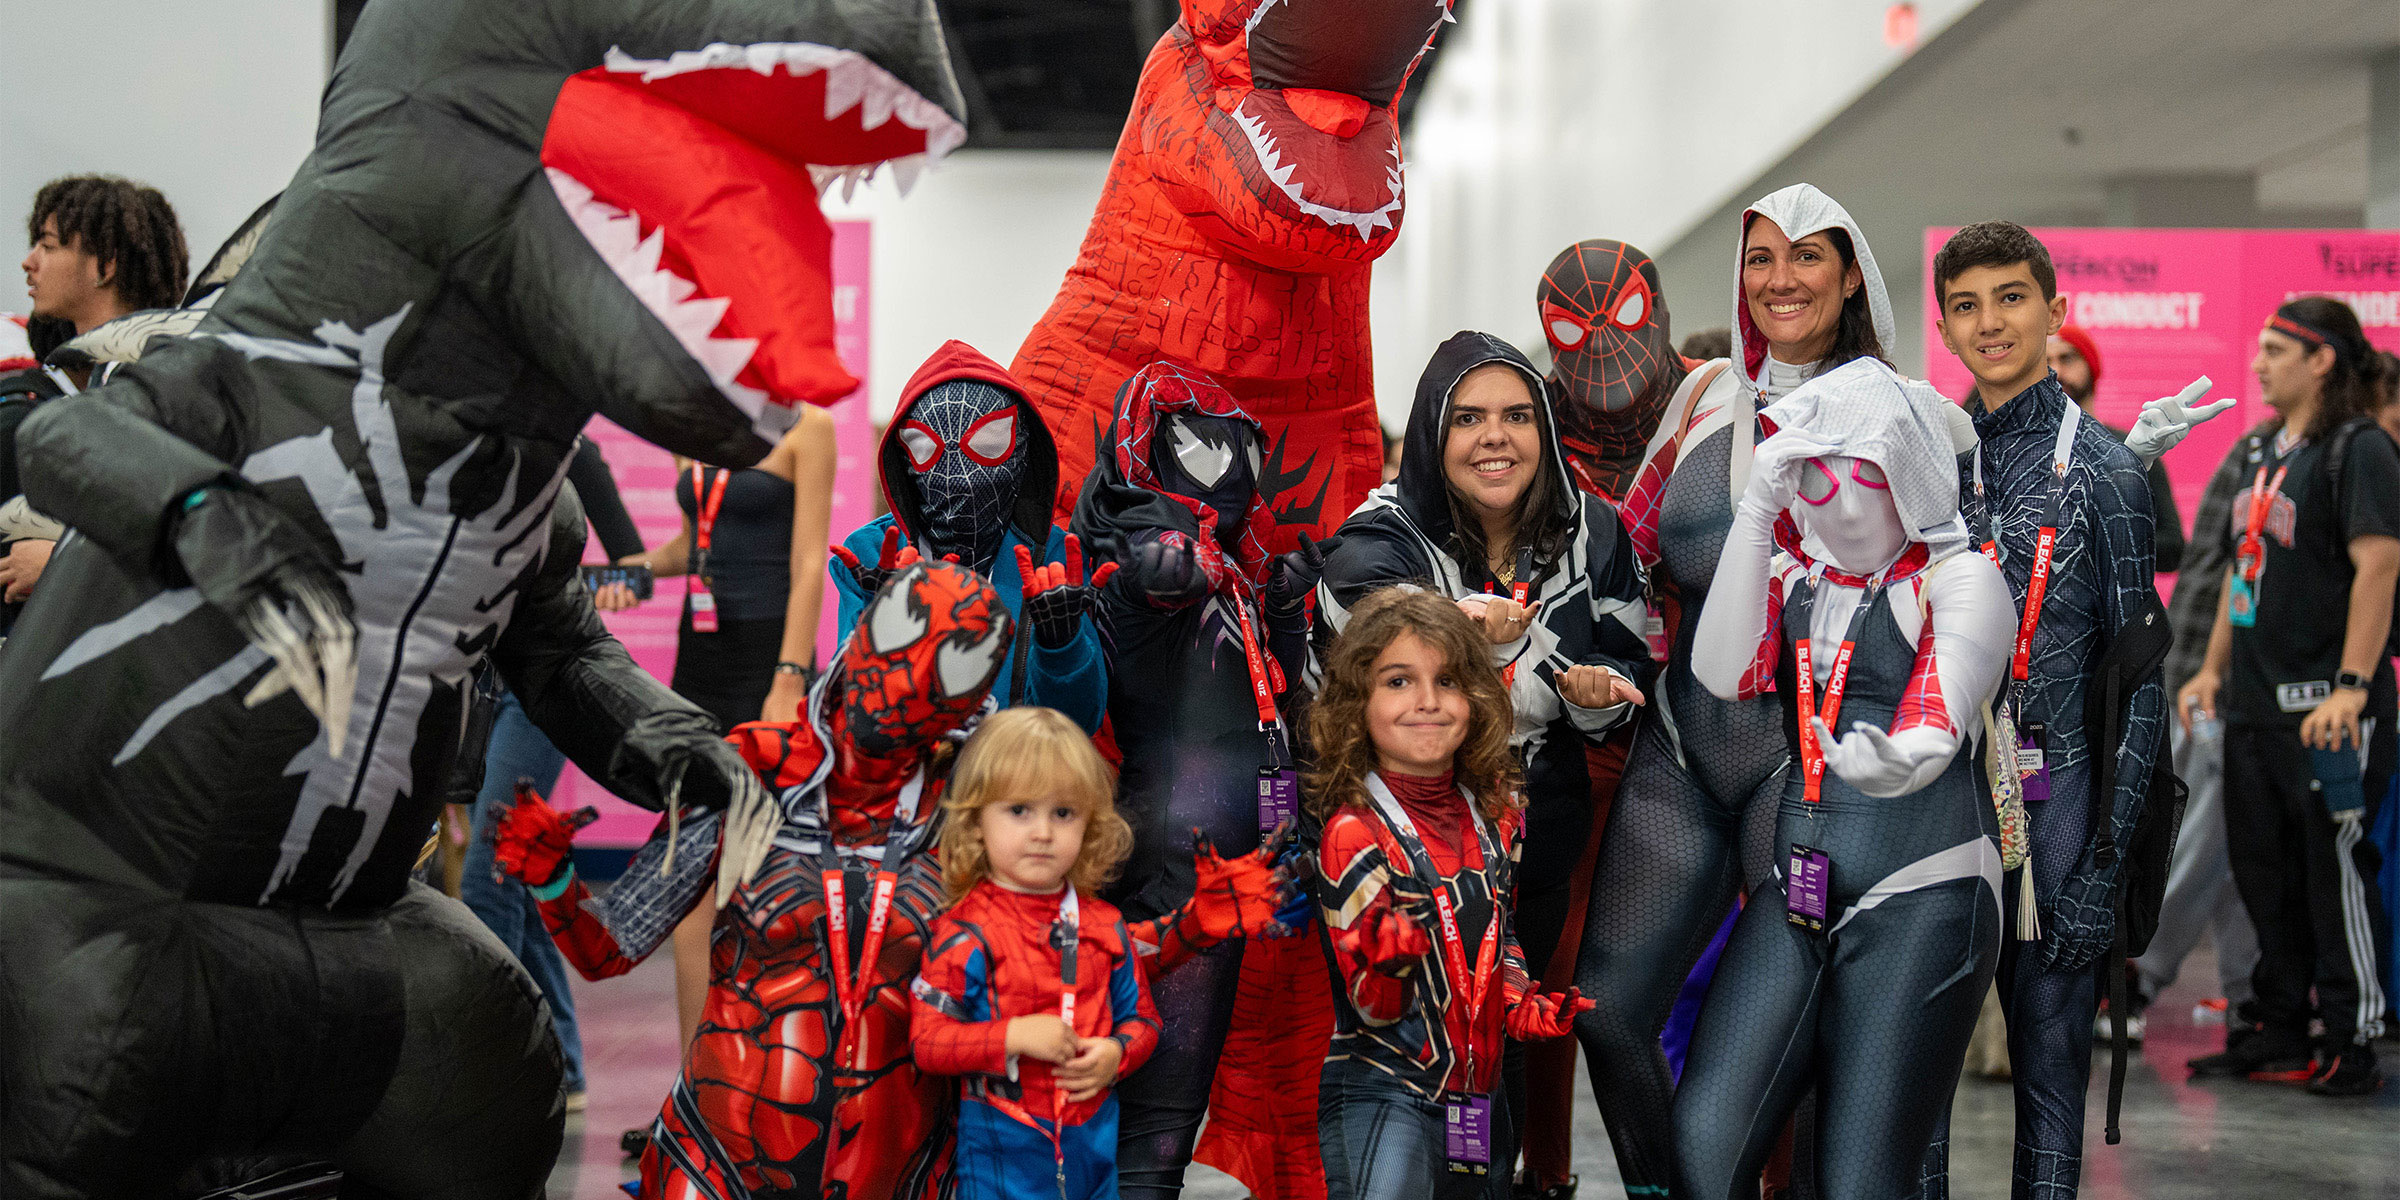 Florida Super Con 2019  Comicon Adventures  Review Discover and Compare  100s of Comic Conventions